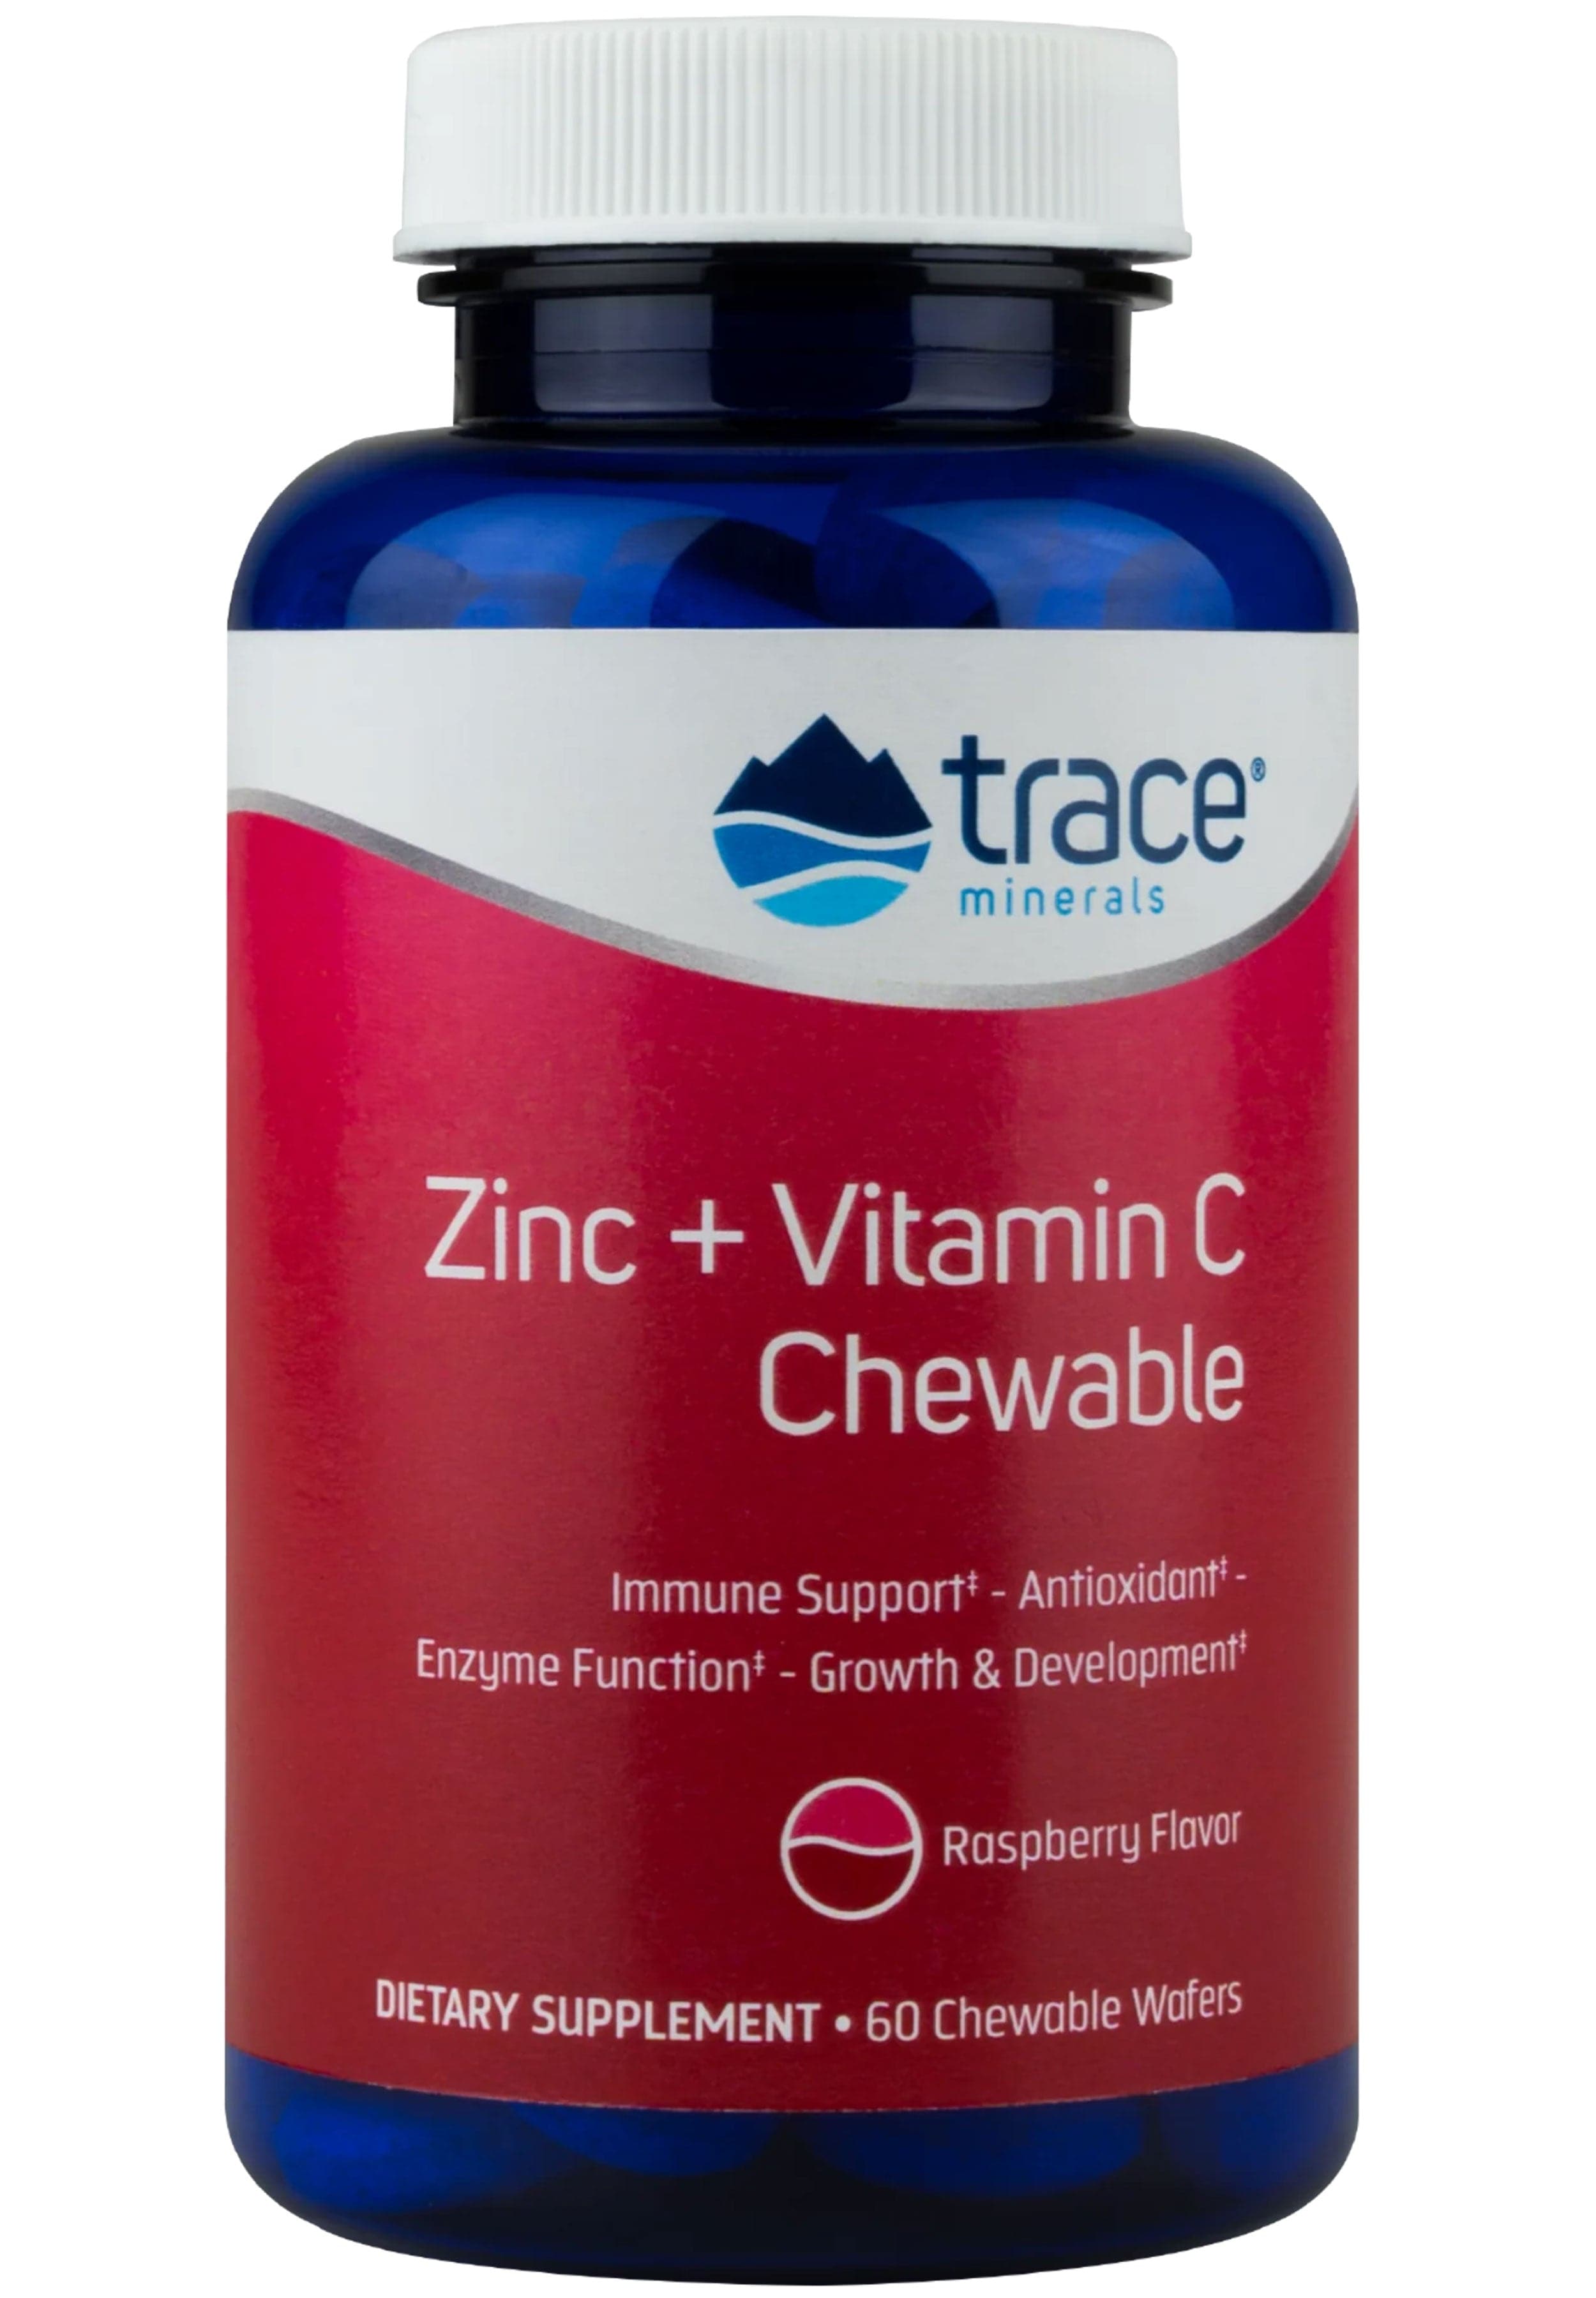 Trace Minerals Research Zinc + Vitamin C Chewable